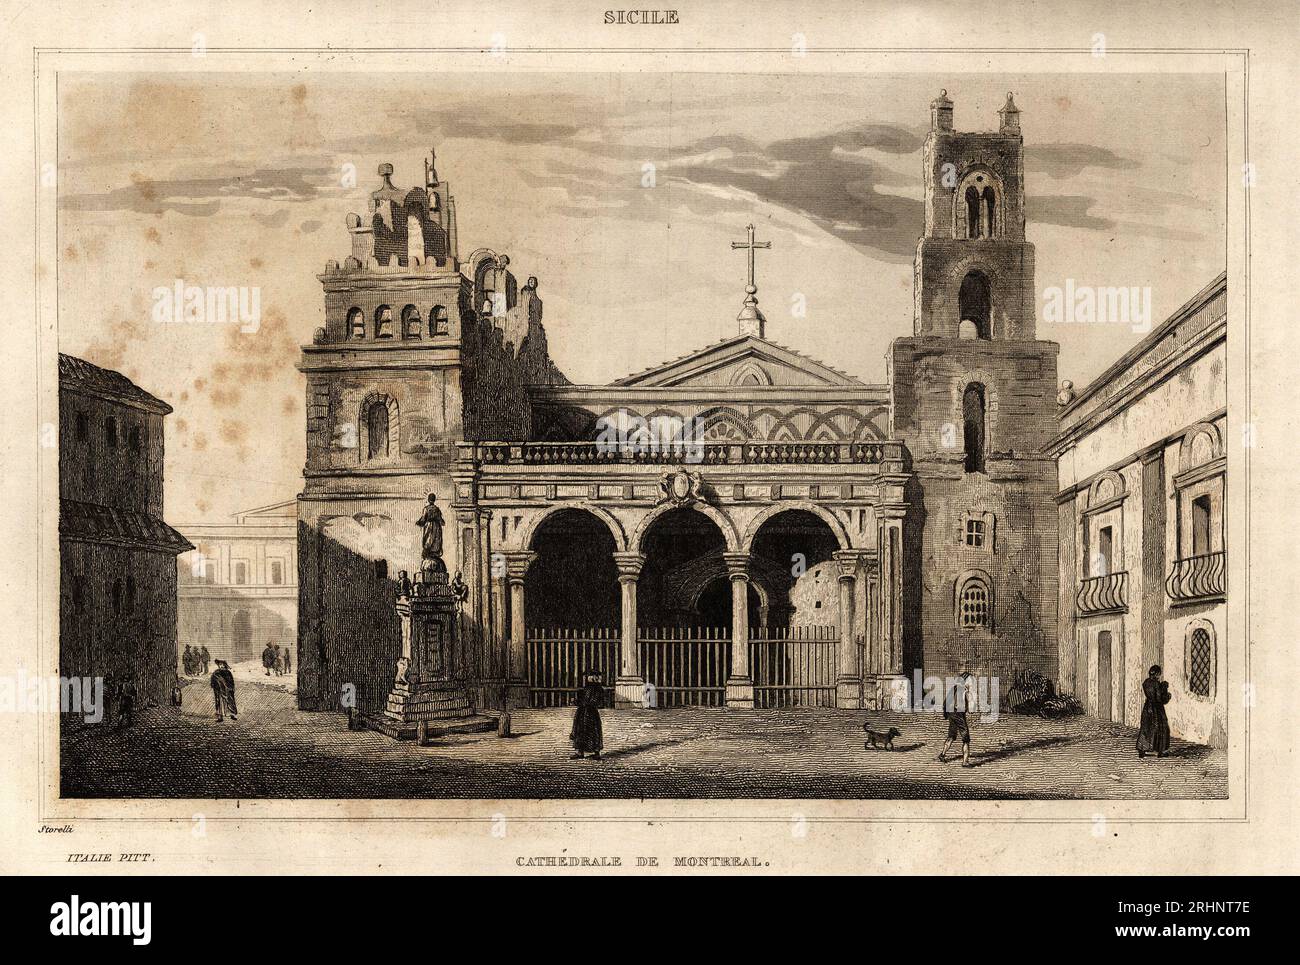 La cathedrale de Montreal, (Monreale) en Sicile, gravure de Storelli, in 'Italie pittoresque', Amable Coste Editeur,1836. . Stockfoto